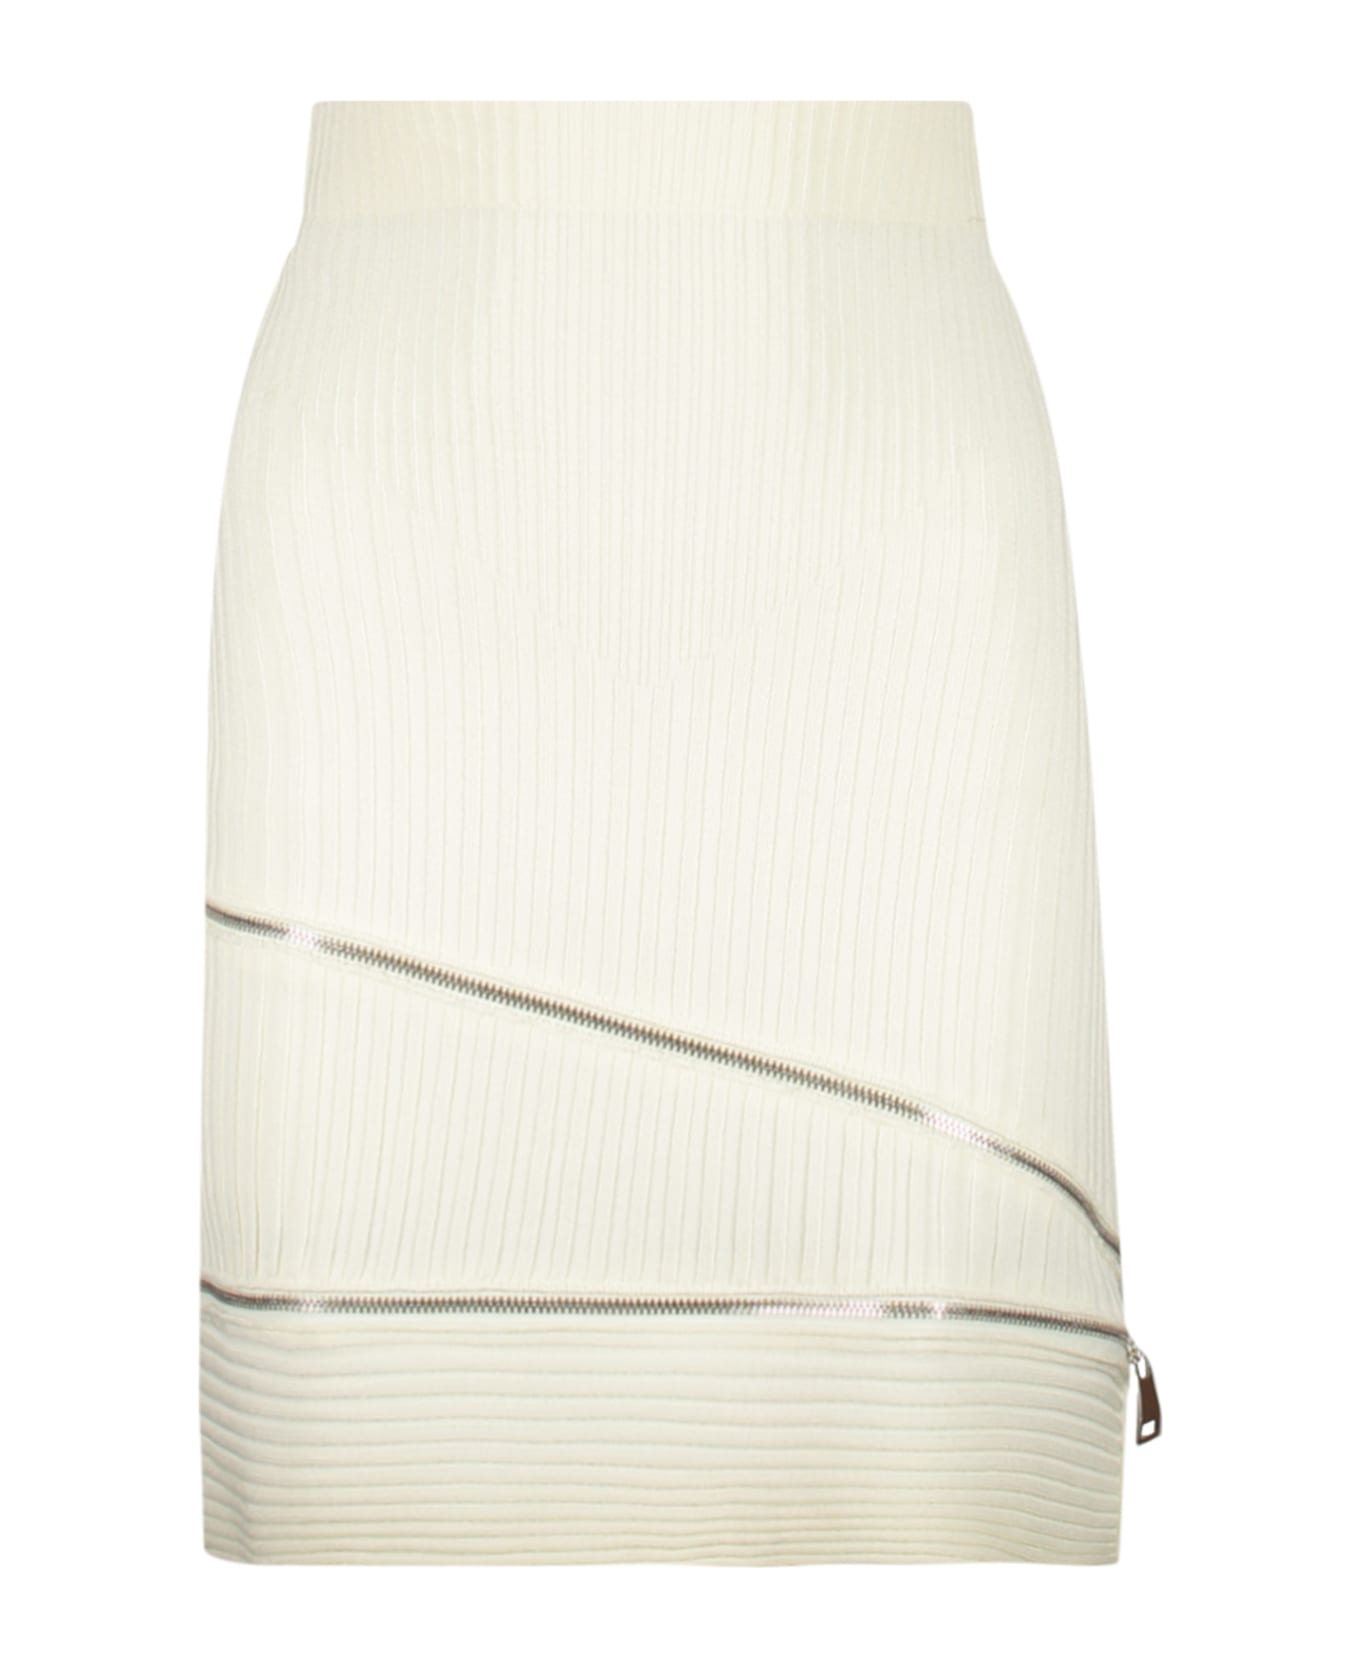 ANDREĀDAMO Knitted Mini Skirt - White スカート